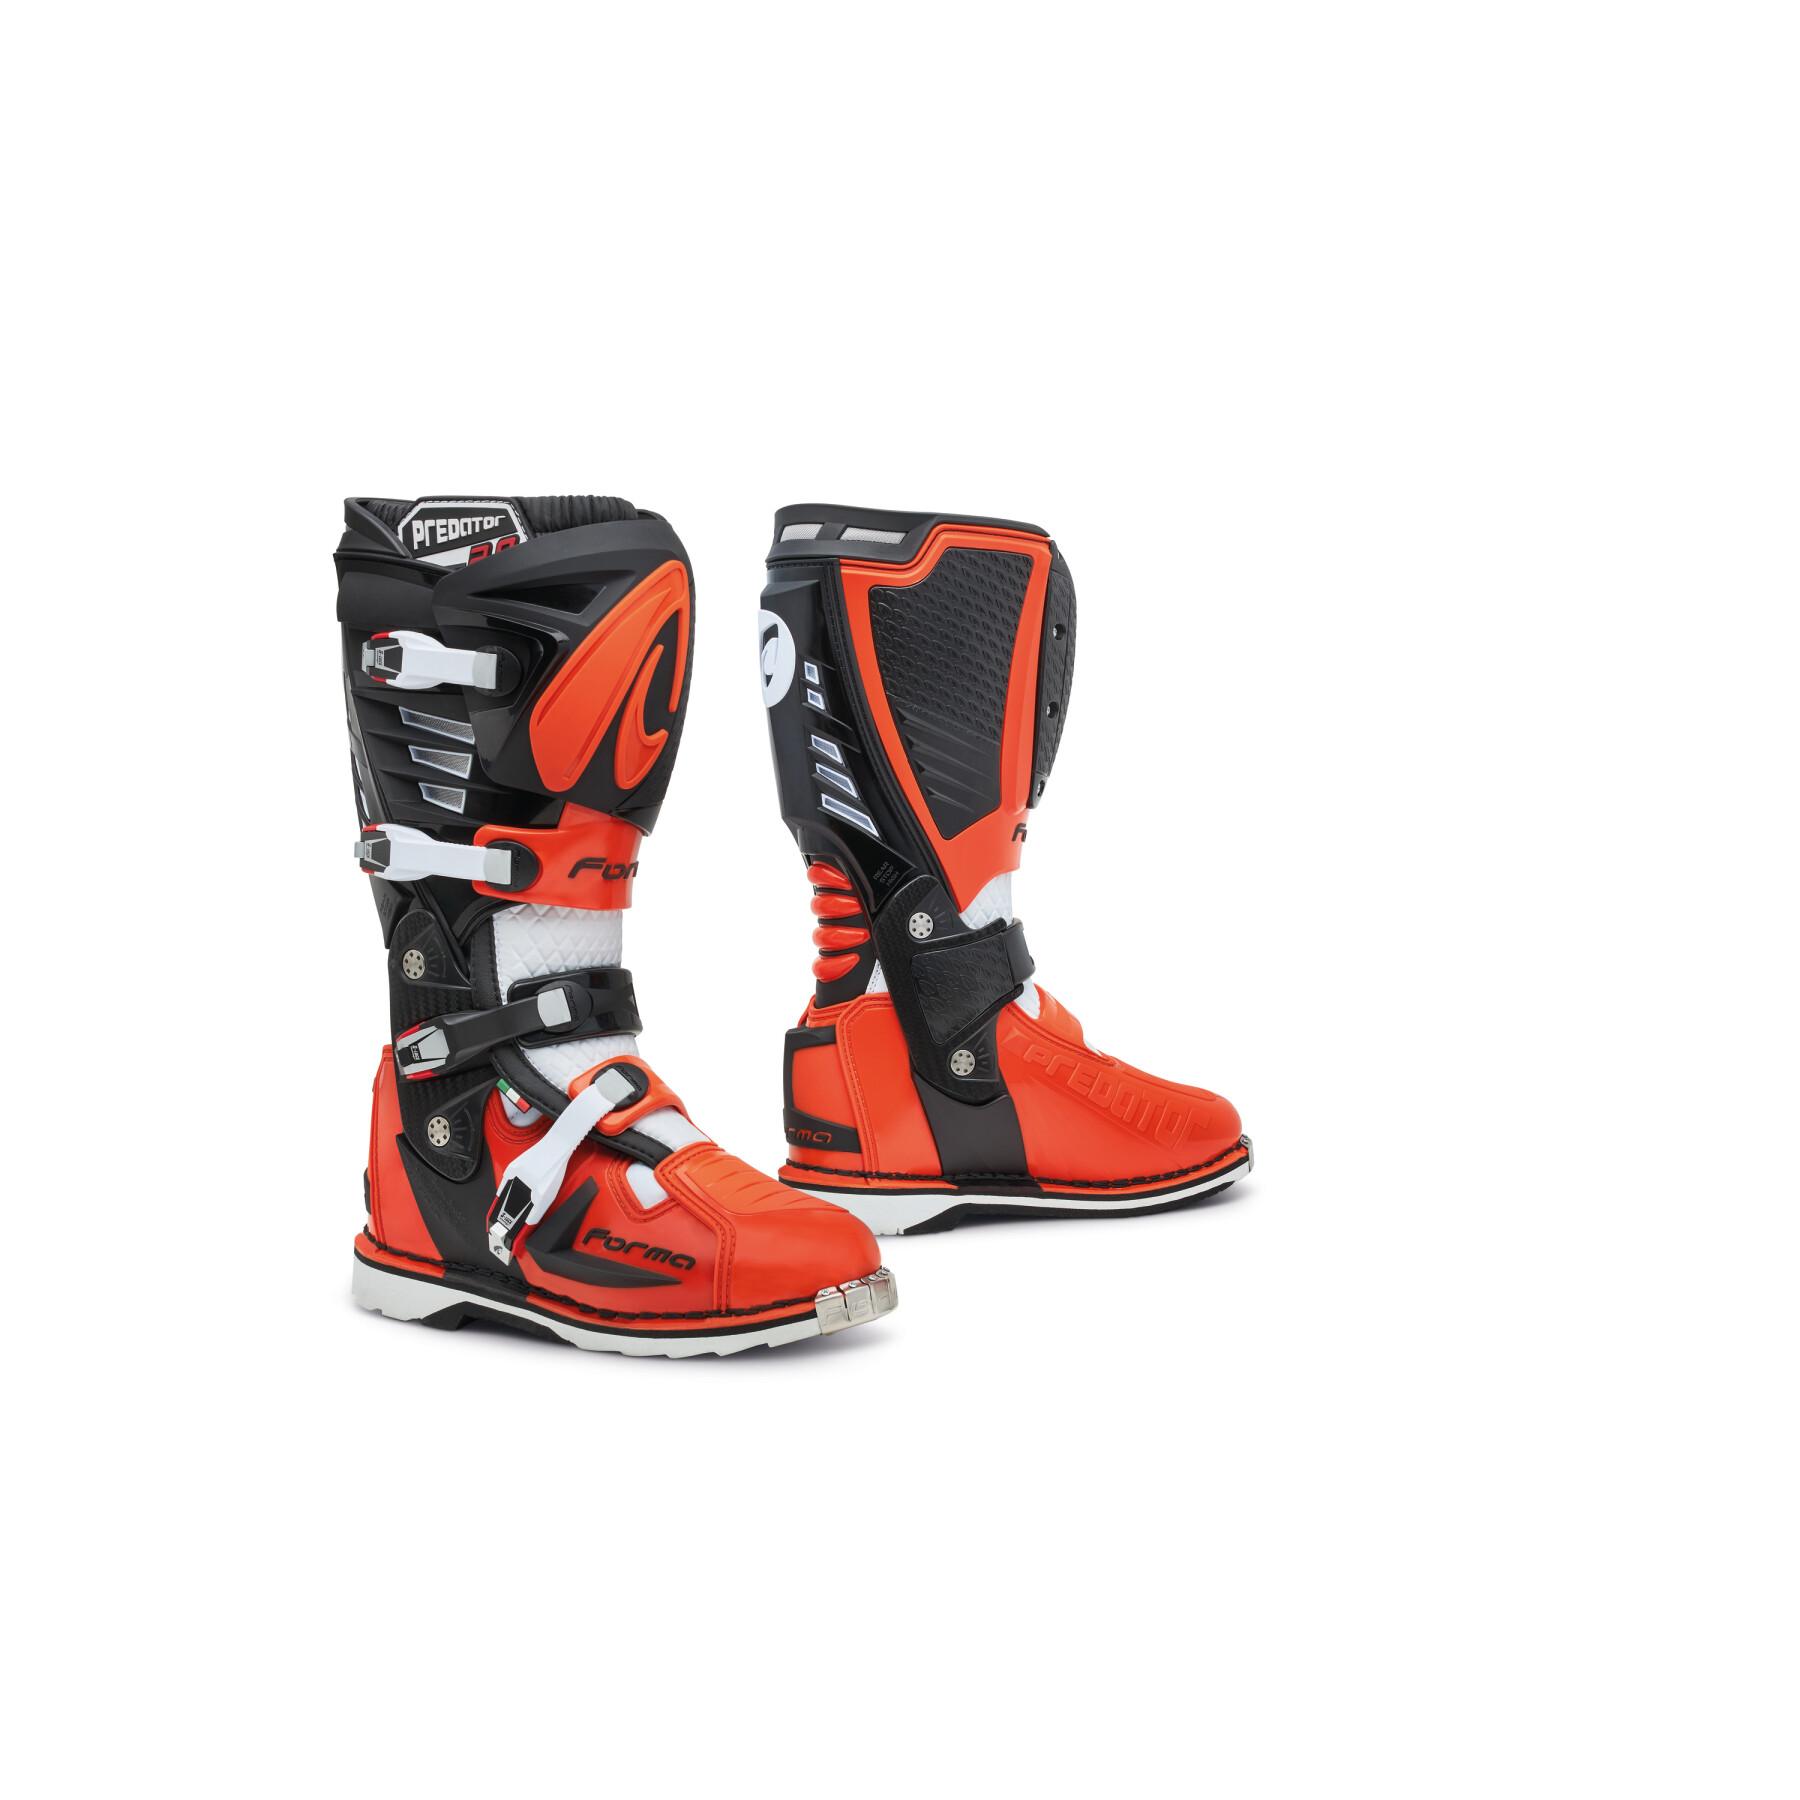 Homologated motorcycle boots Forma predator 2.0